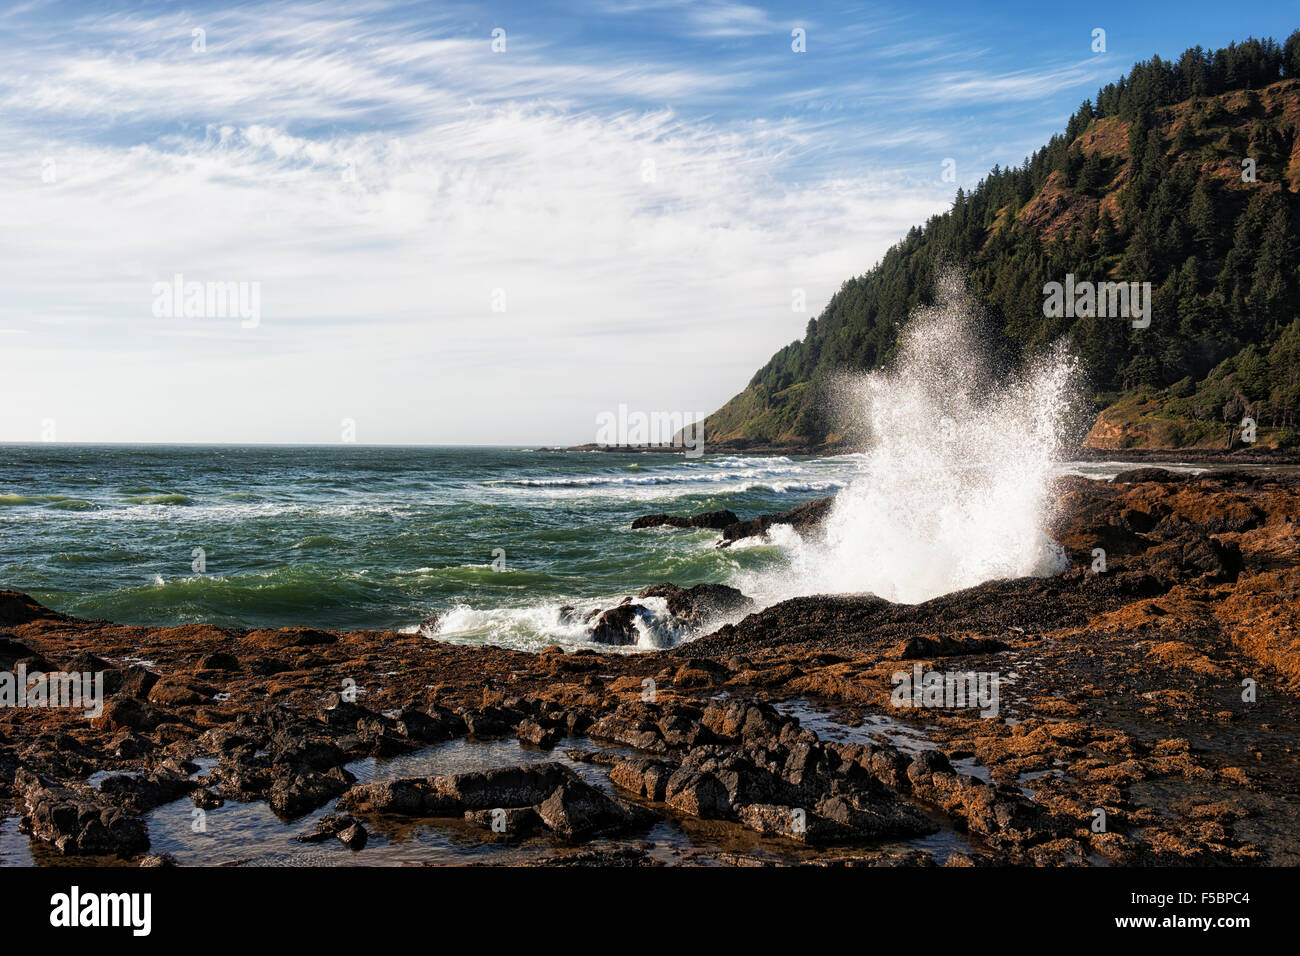 Waves break against the rocky shoreline of Oregon's Cape Perpetua Scenic Area. Stock Photo